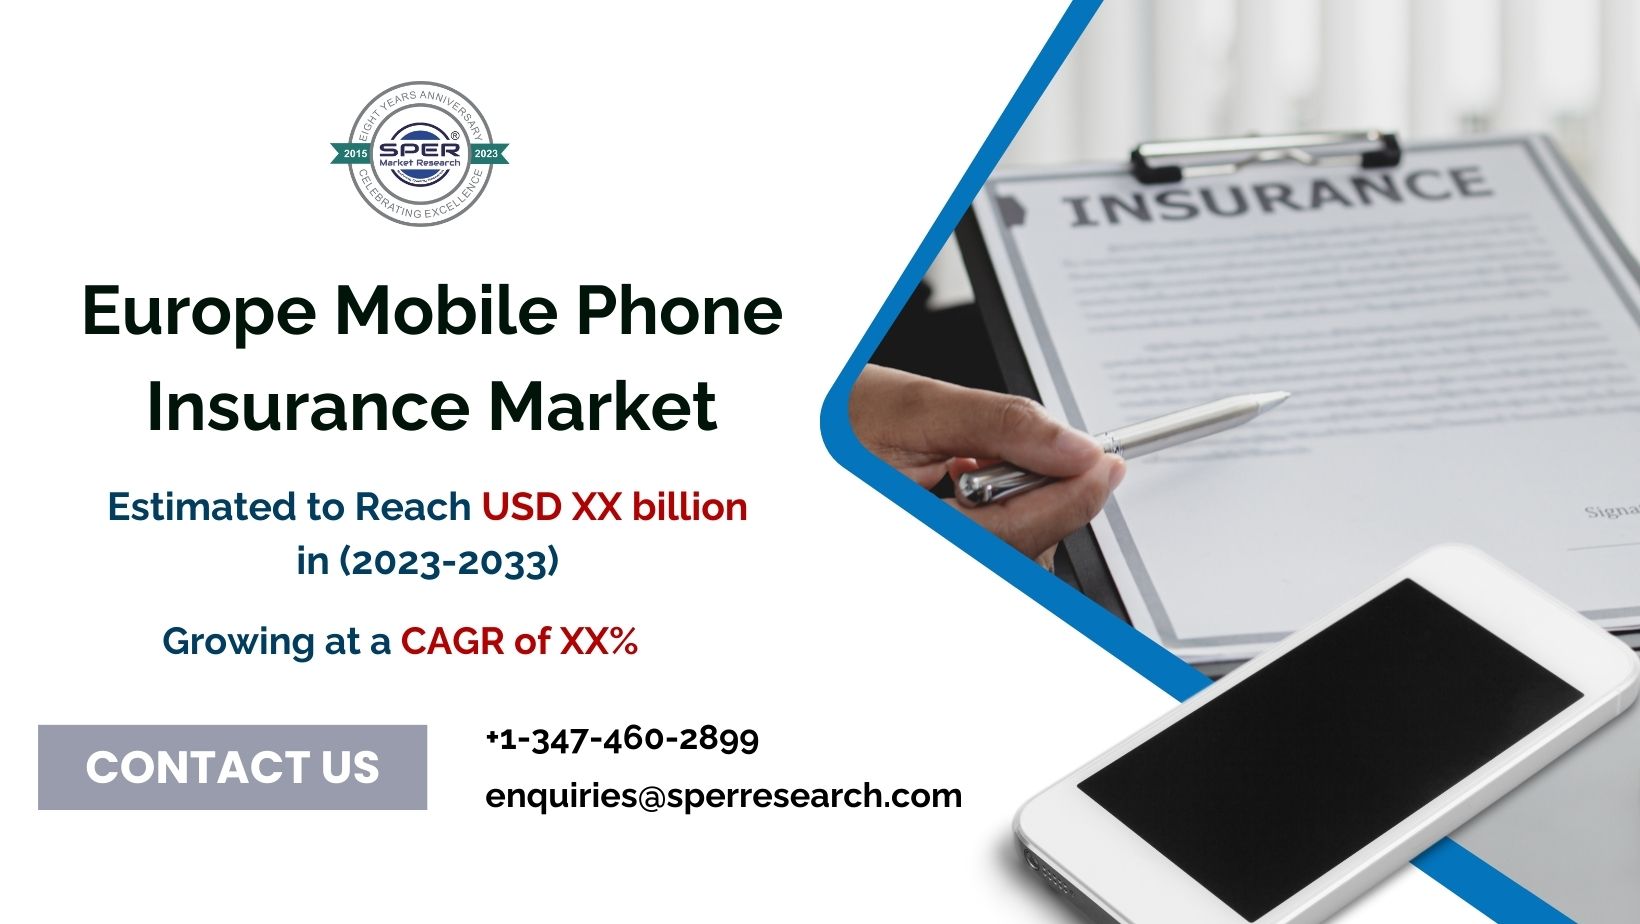 Europe Mobile Phone Insurance Market